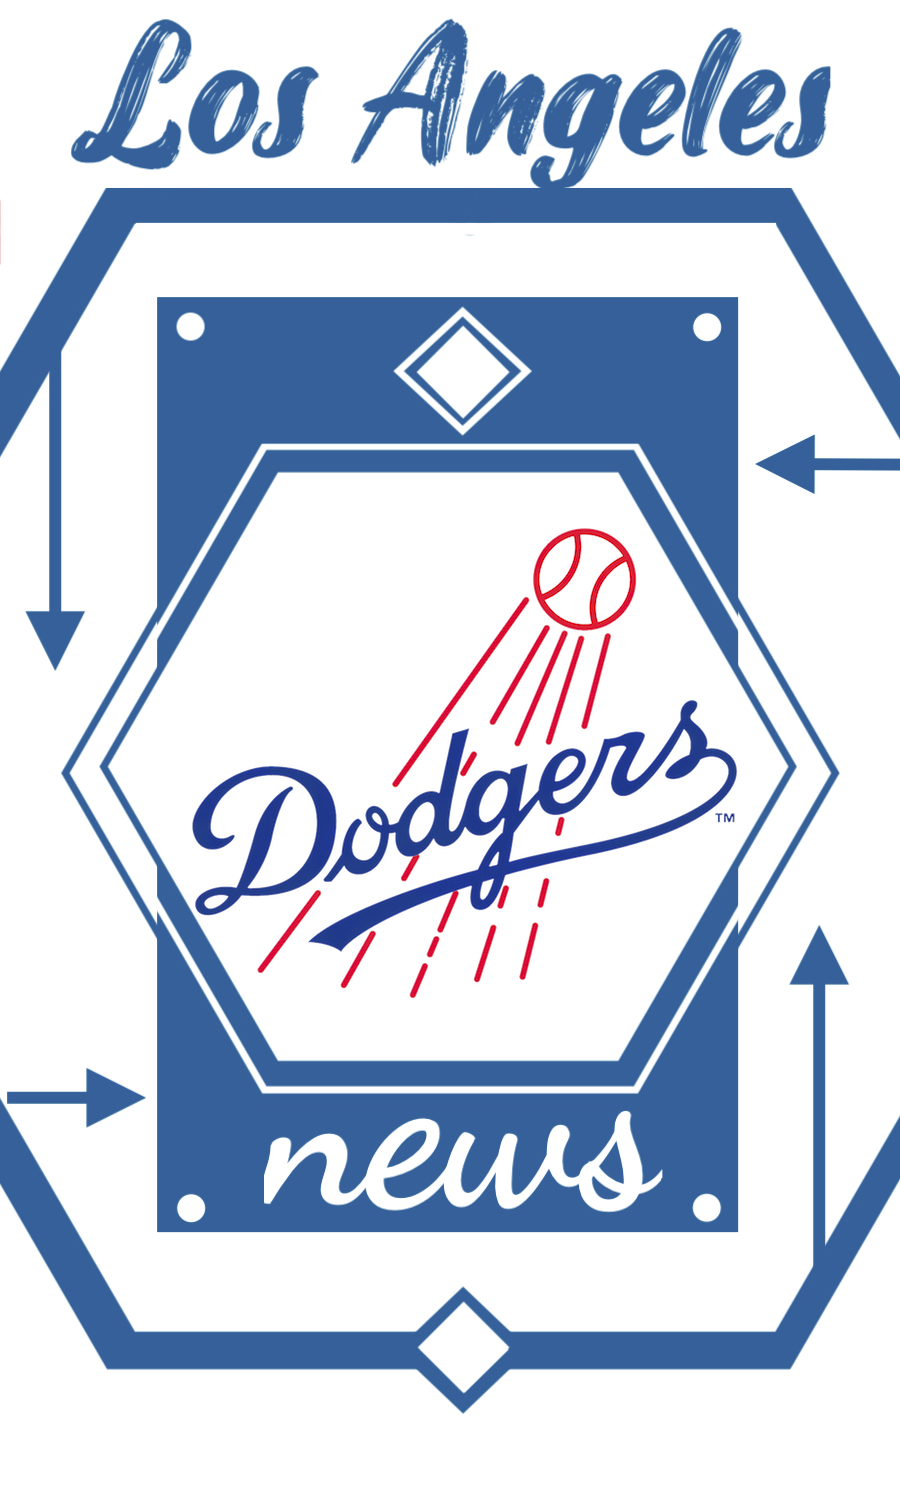 Dodgers News Update